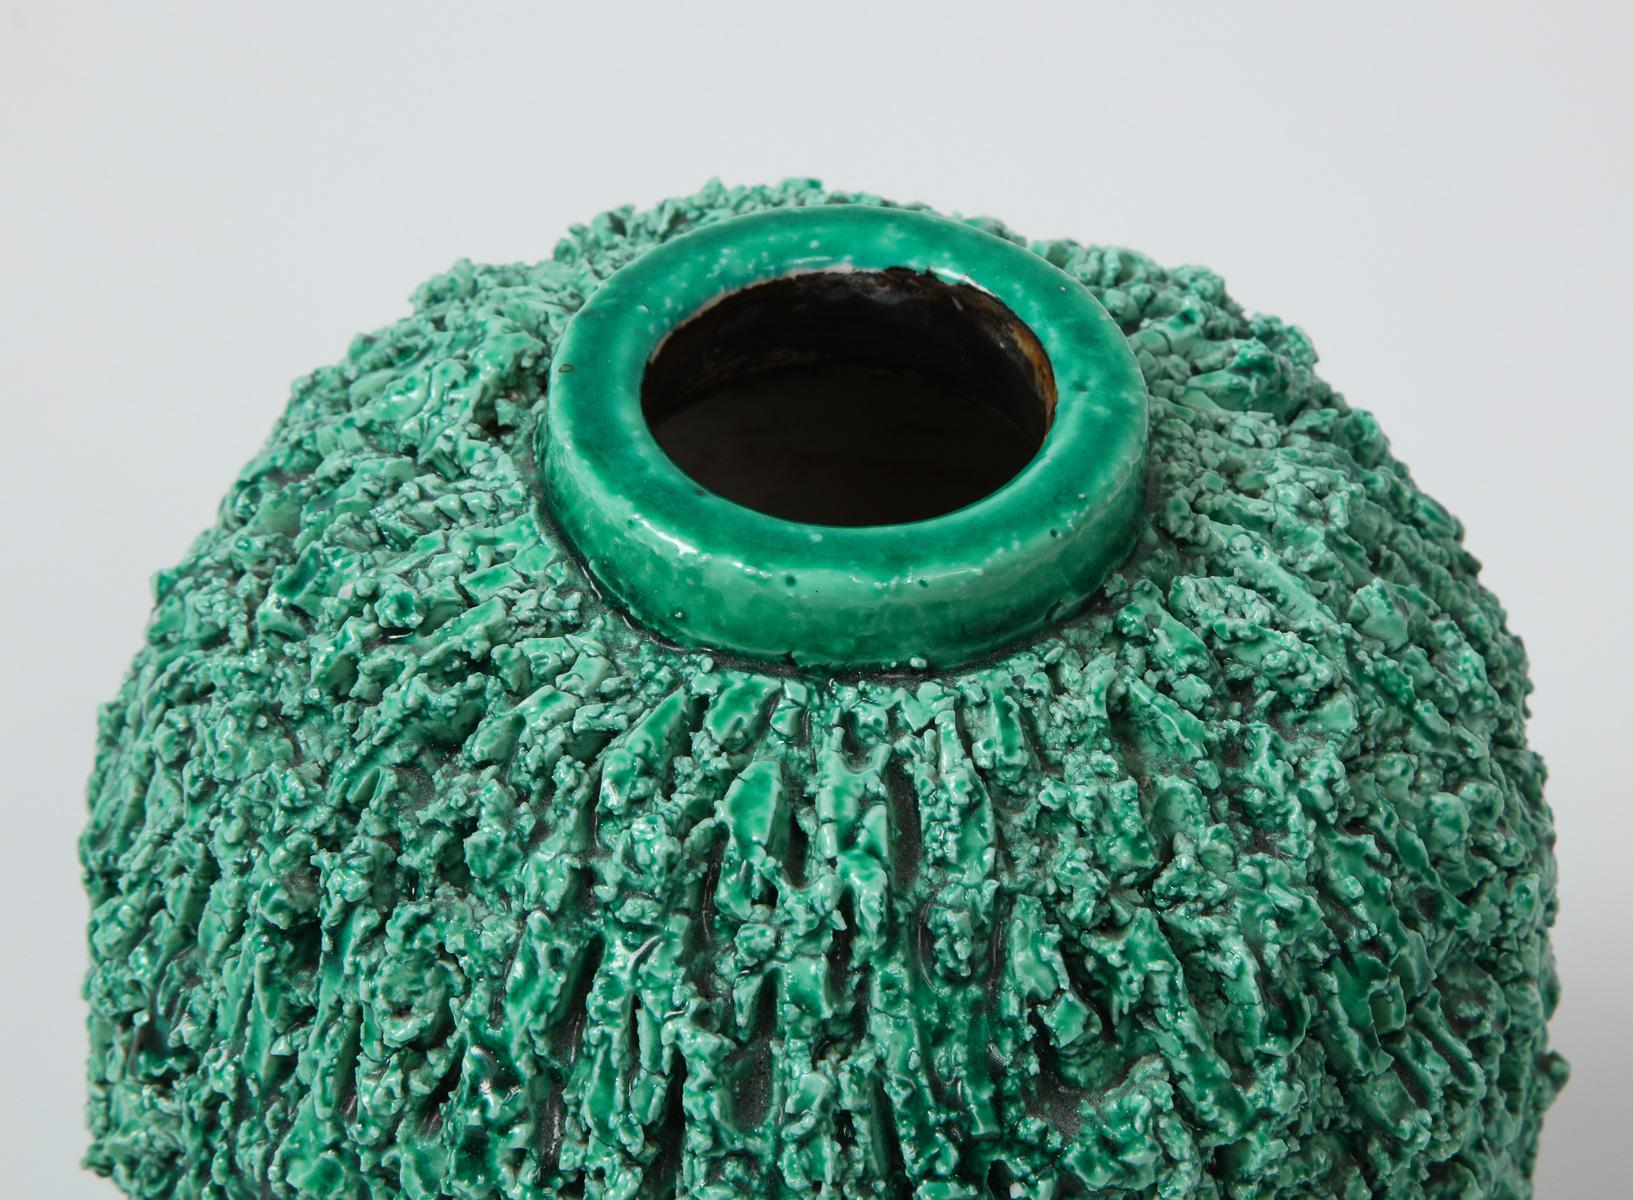 Ceramic Vase by Gunnar Nylund, Scandinavian, Green Vase, 